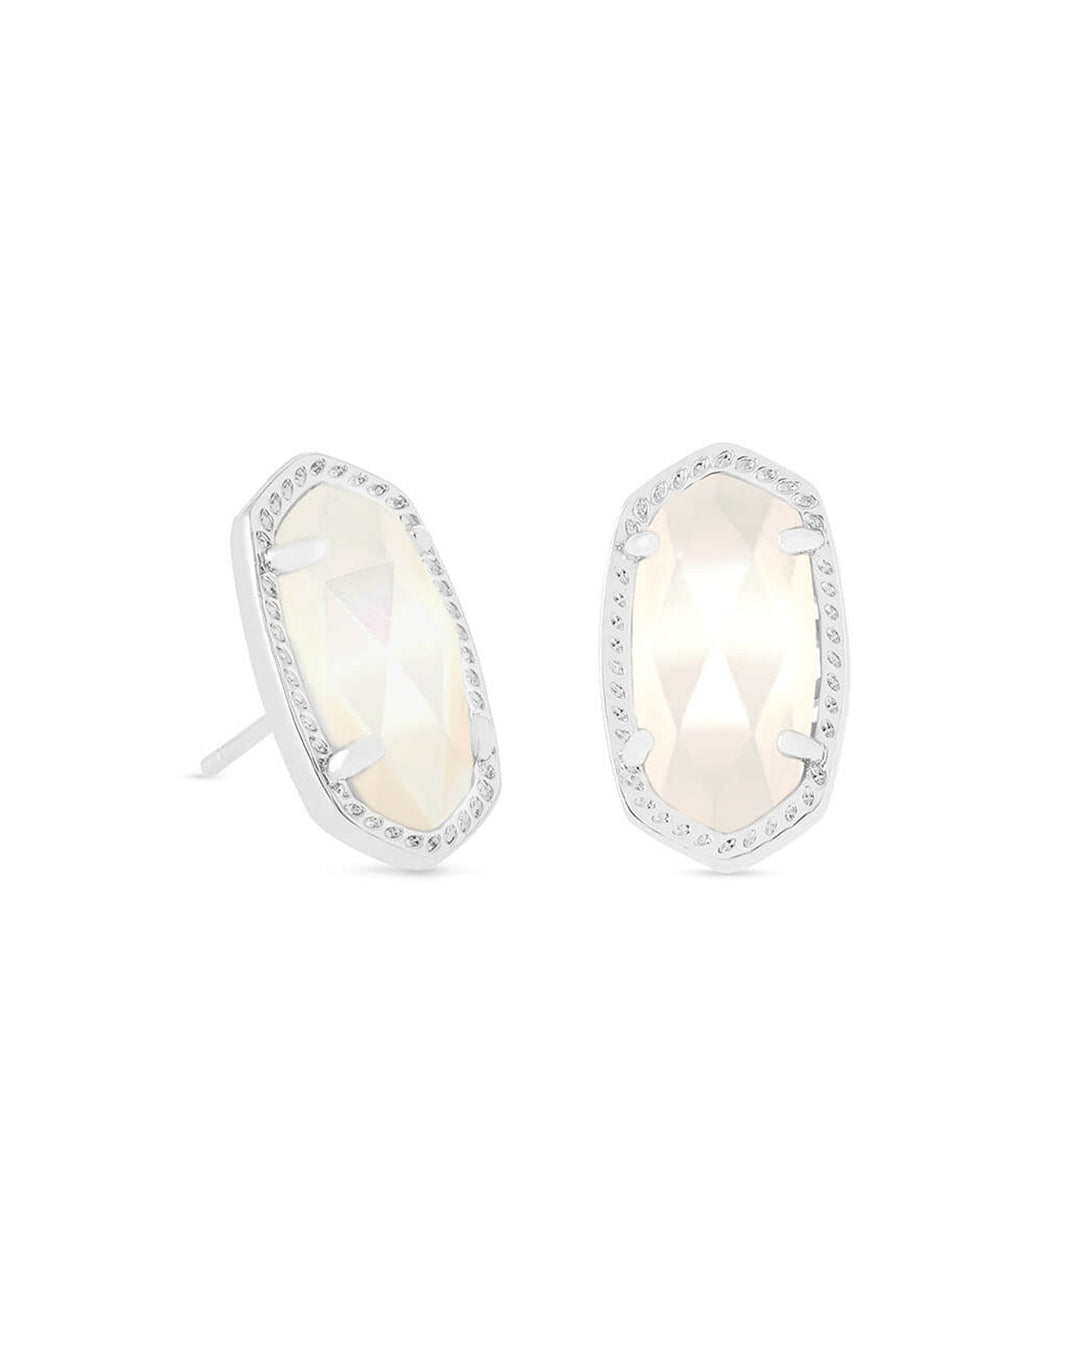 Kendra Scott Ellie Silver Stud Earrings In Ivory Mother of Pearl